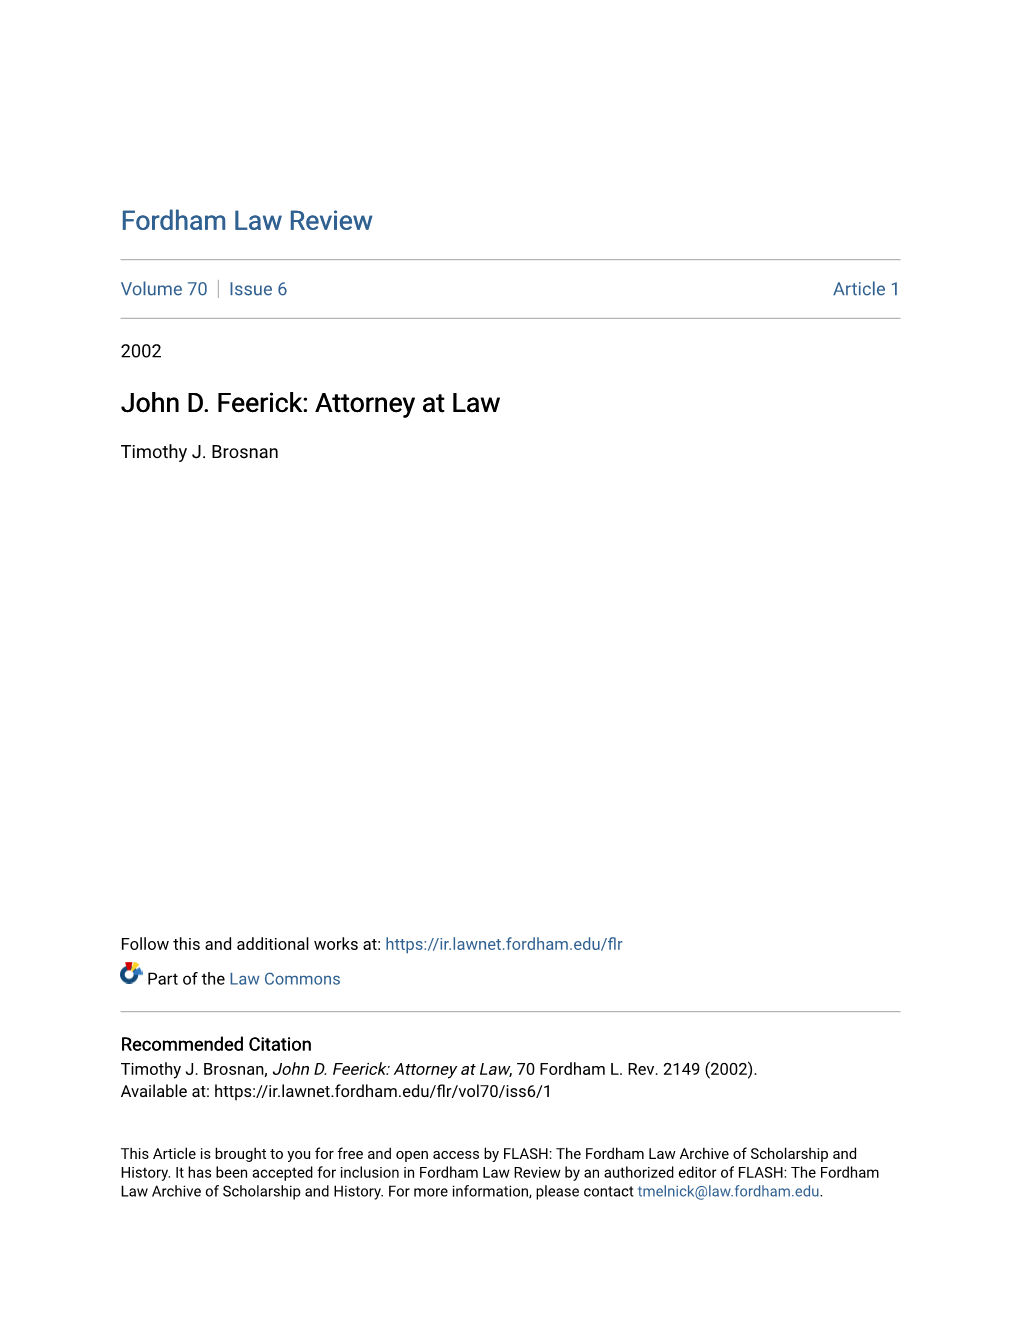 John D. Feerick: Attorney at Law